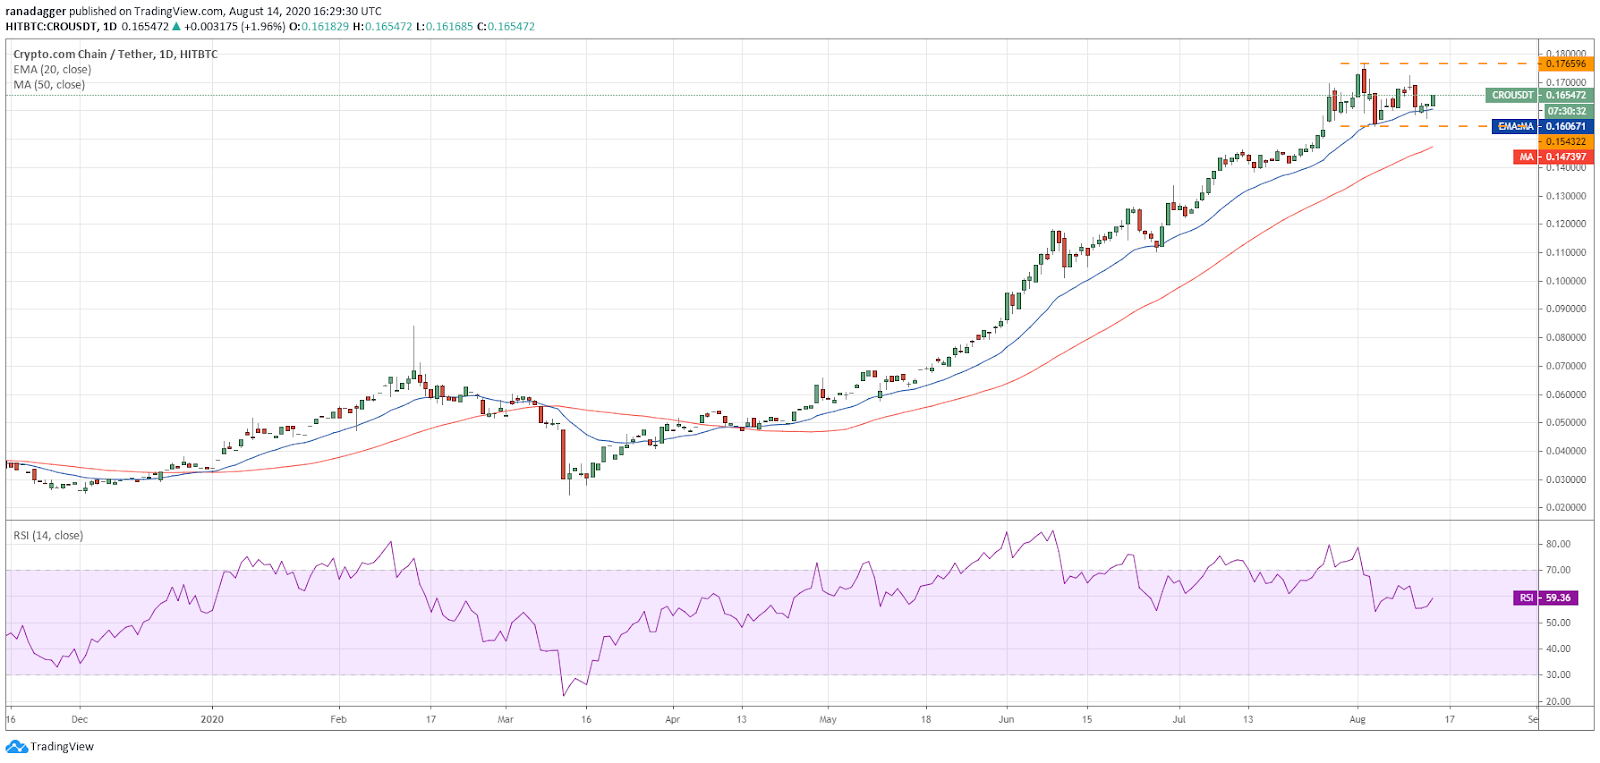 CRO/USD daily chart